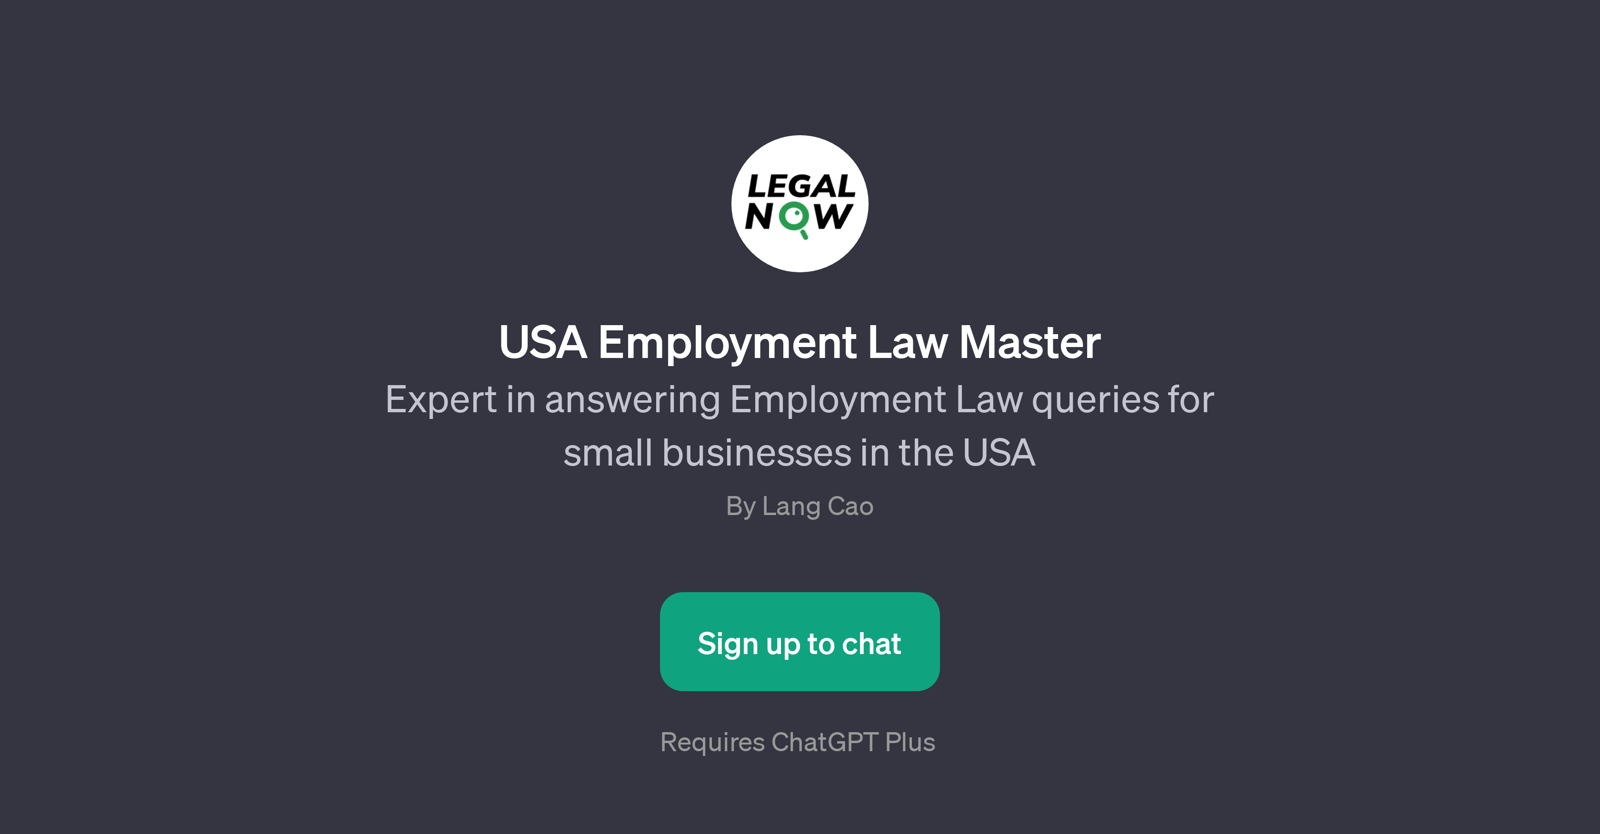 USA Employment Law Master website